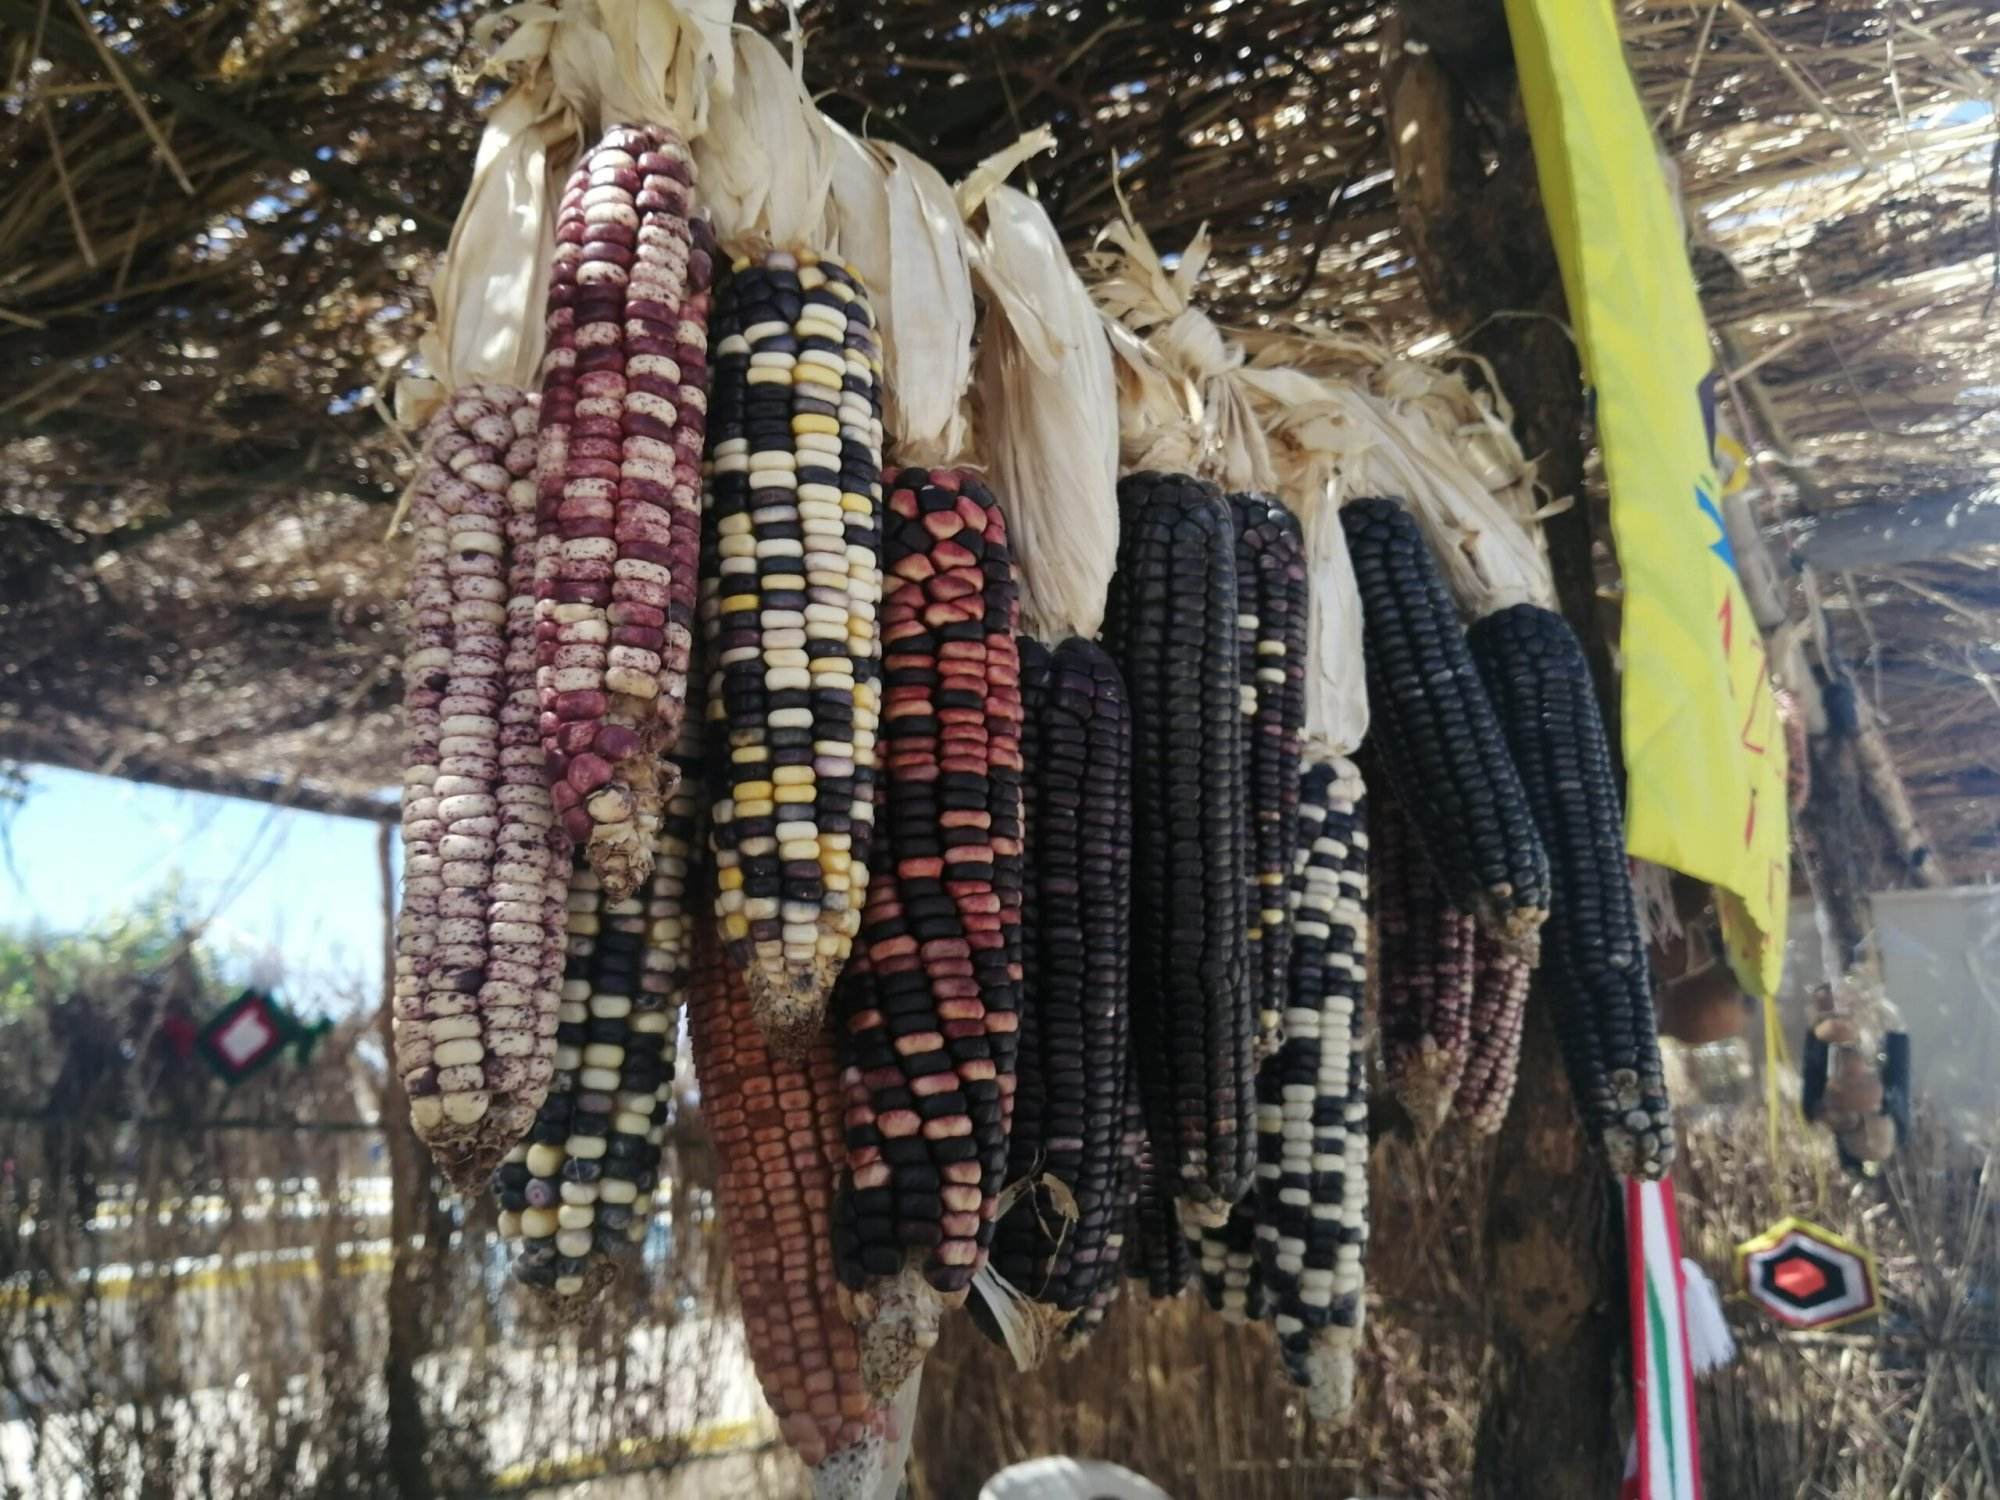 Corn hanging to dry